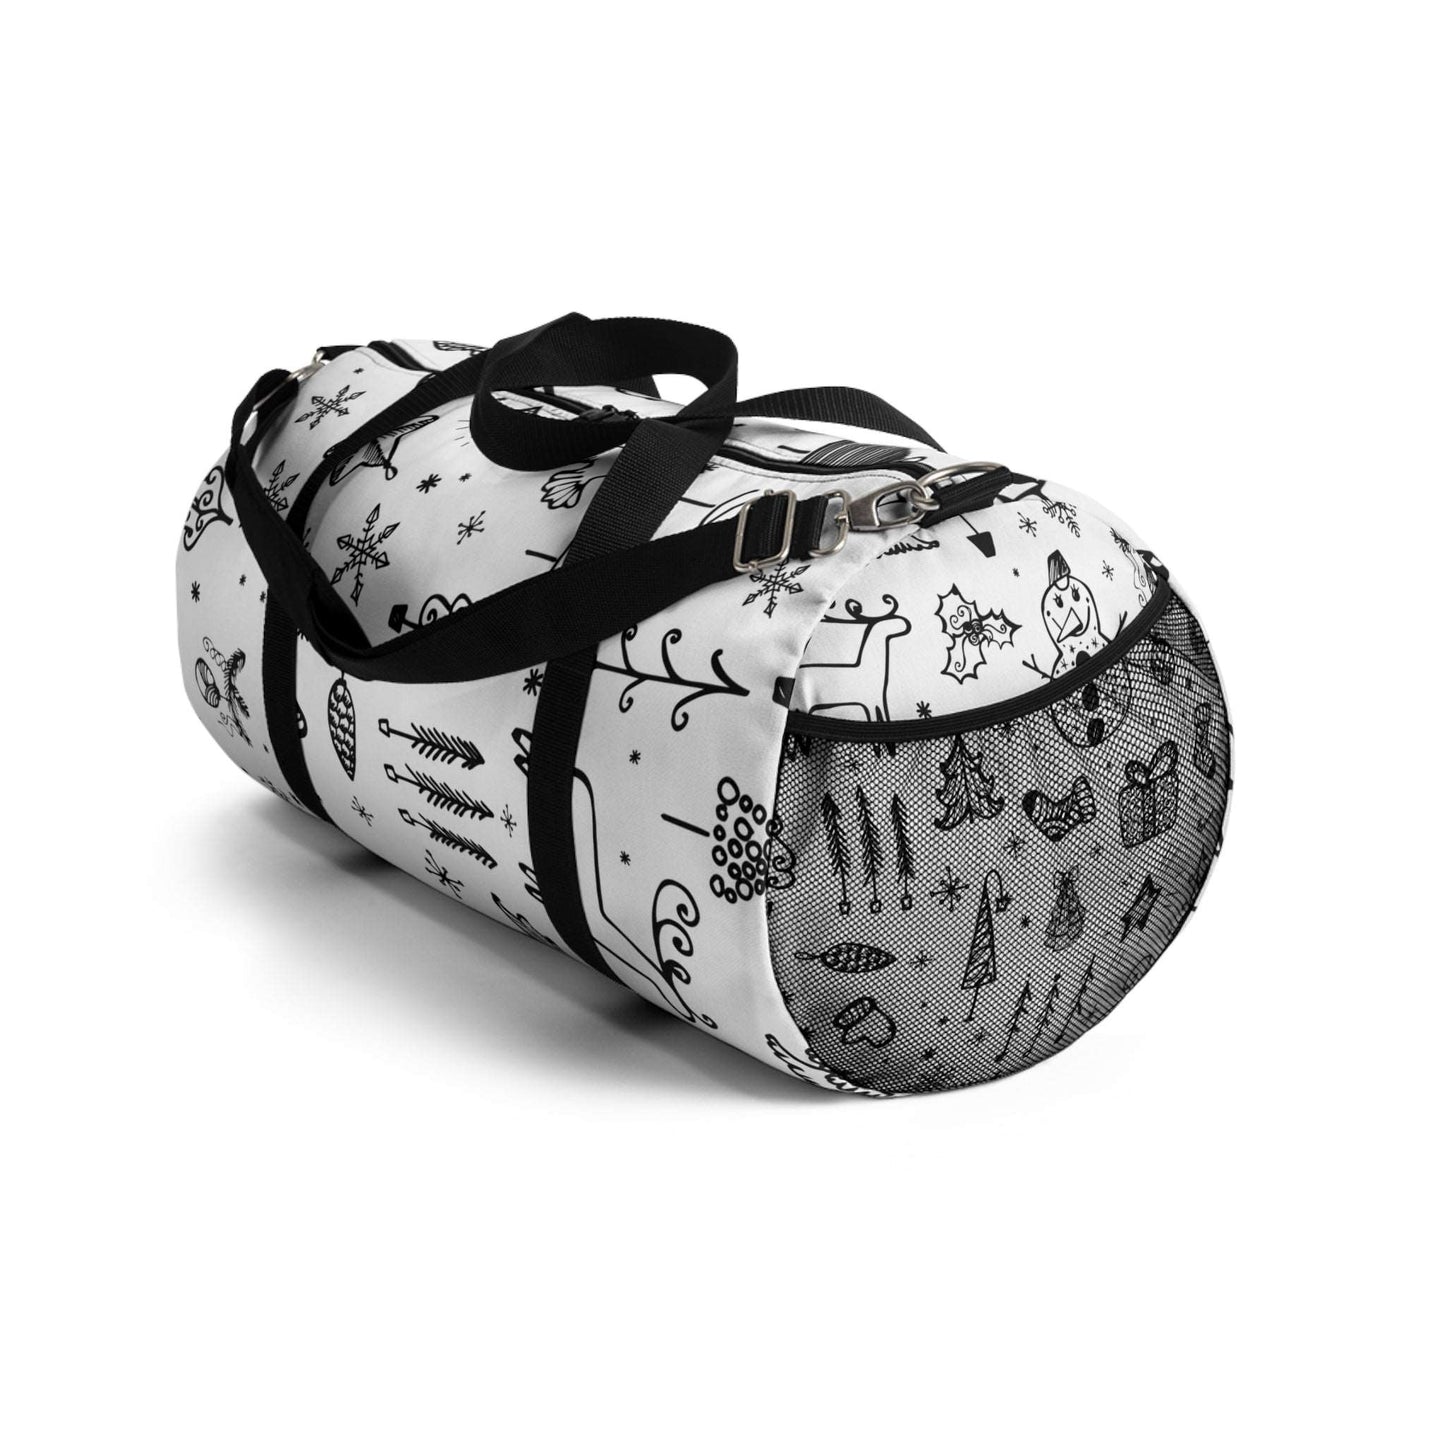 Black and White Christmas Duffel Bag